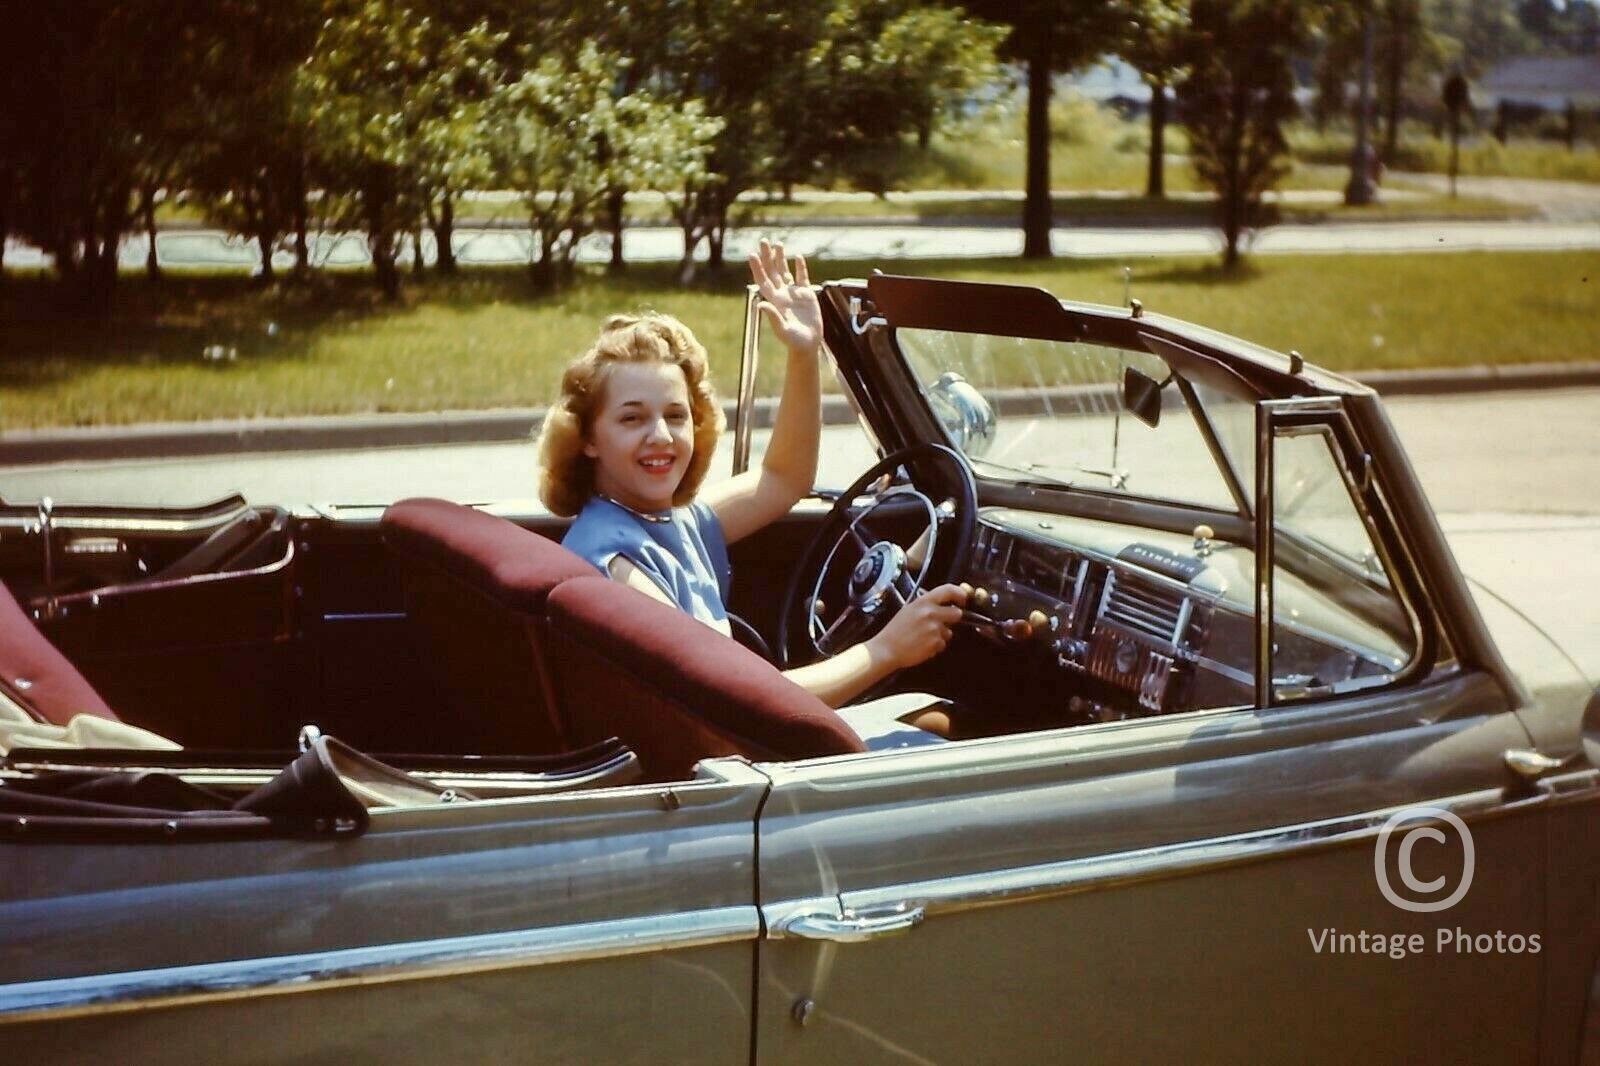 1950s American Woman Plymouth Automobile Convertible Car